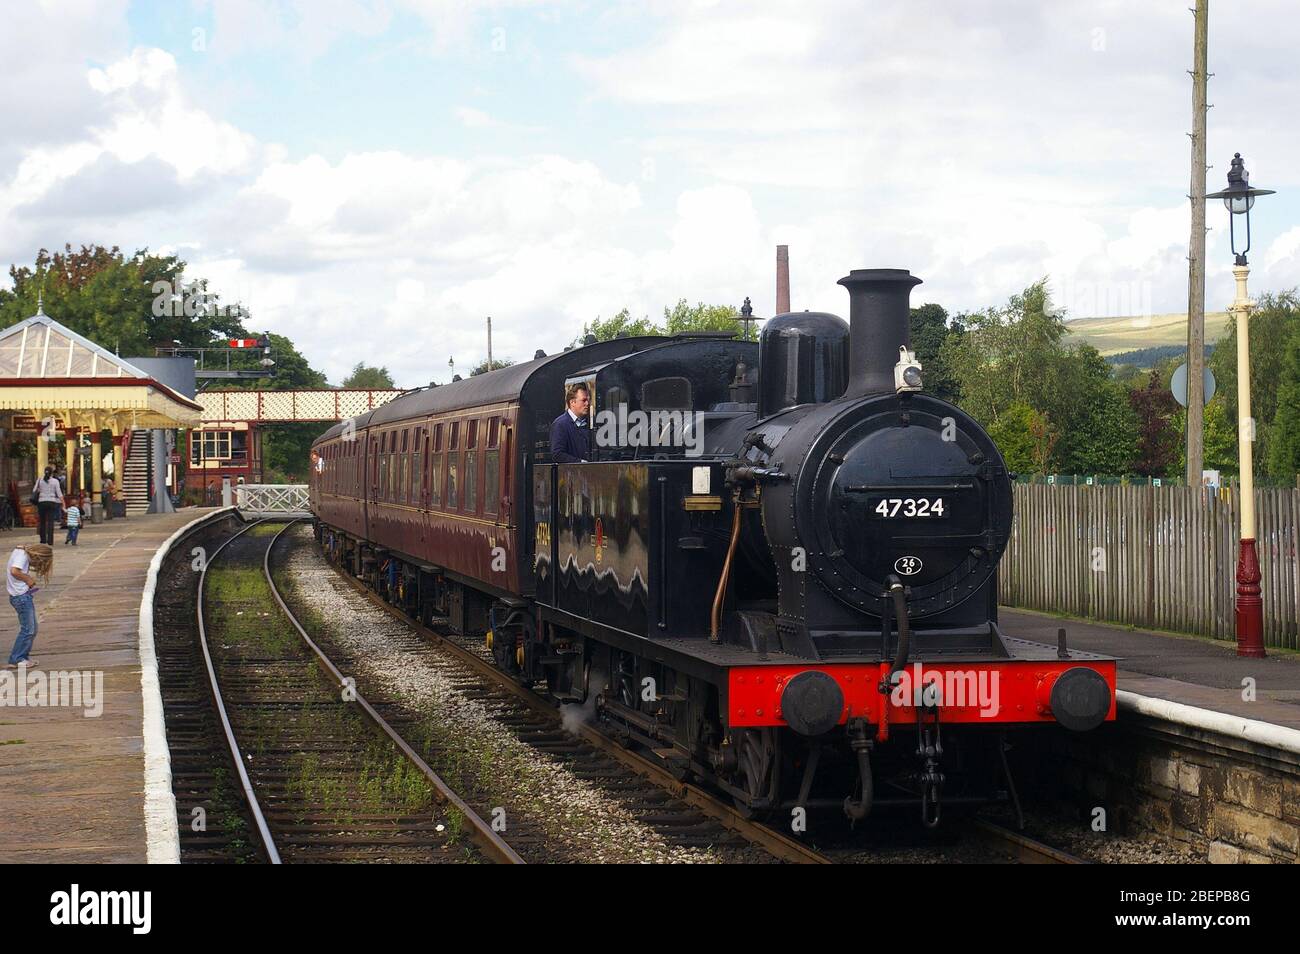 Ramsbottom, Lancashire, UK / August 24 2008: Vintage locomotive at the platform of an historic British railway station Stock Photo